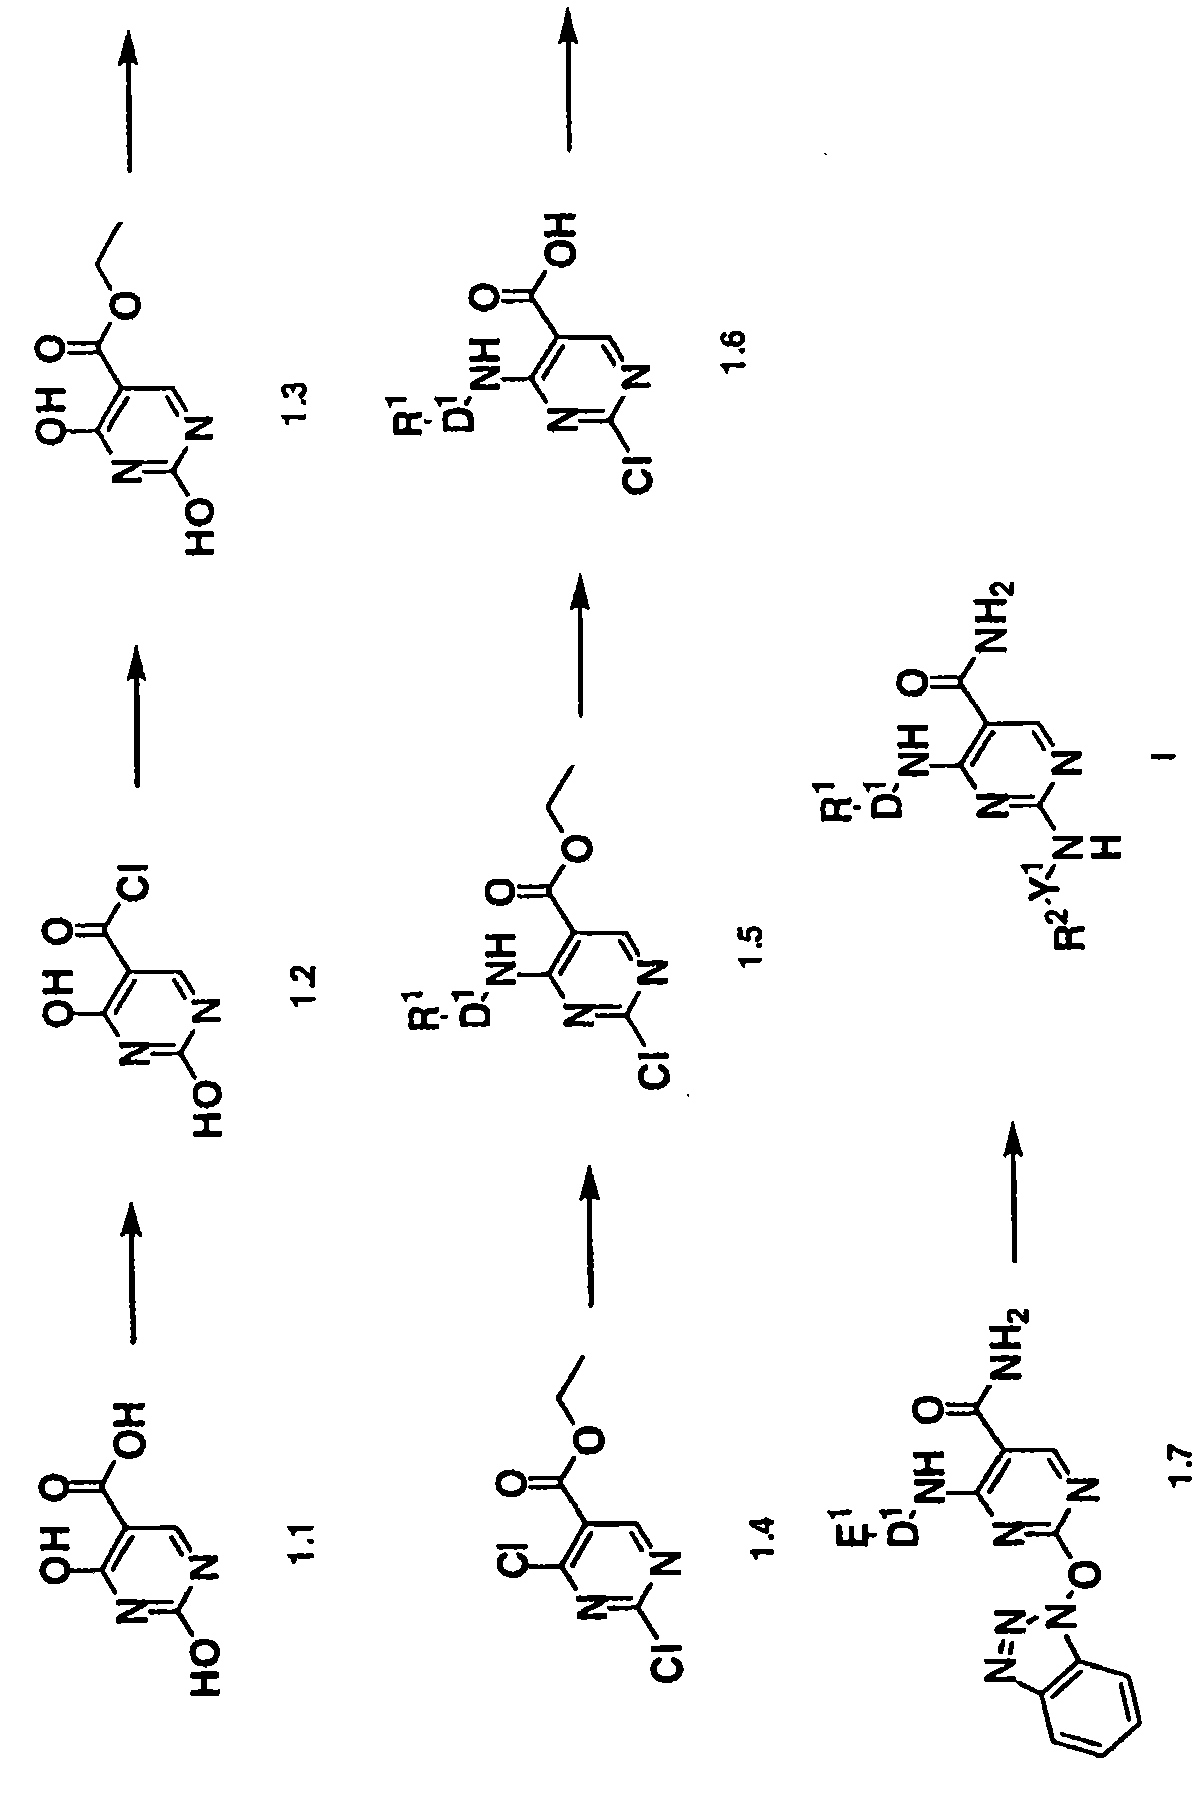 2, 6-diamino- pyrimidin- 5-yl-carboxamides as SYK or JAK kinases inhibitors